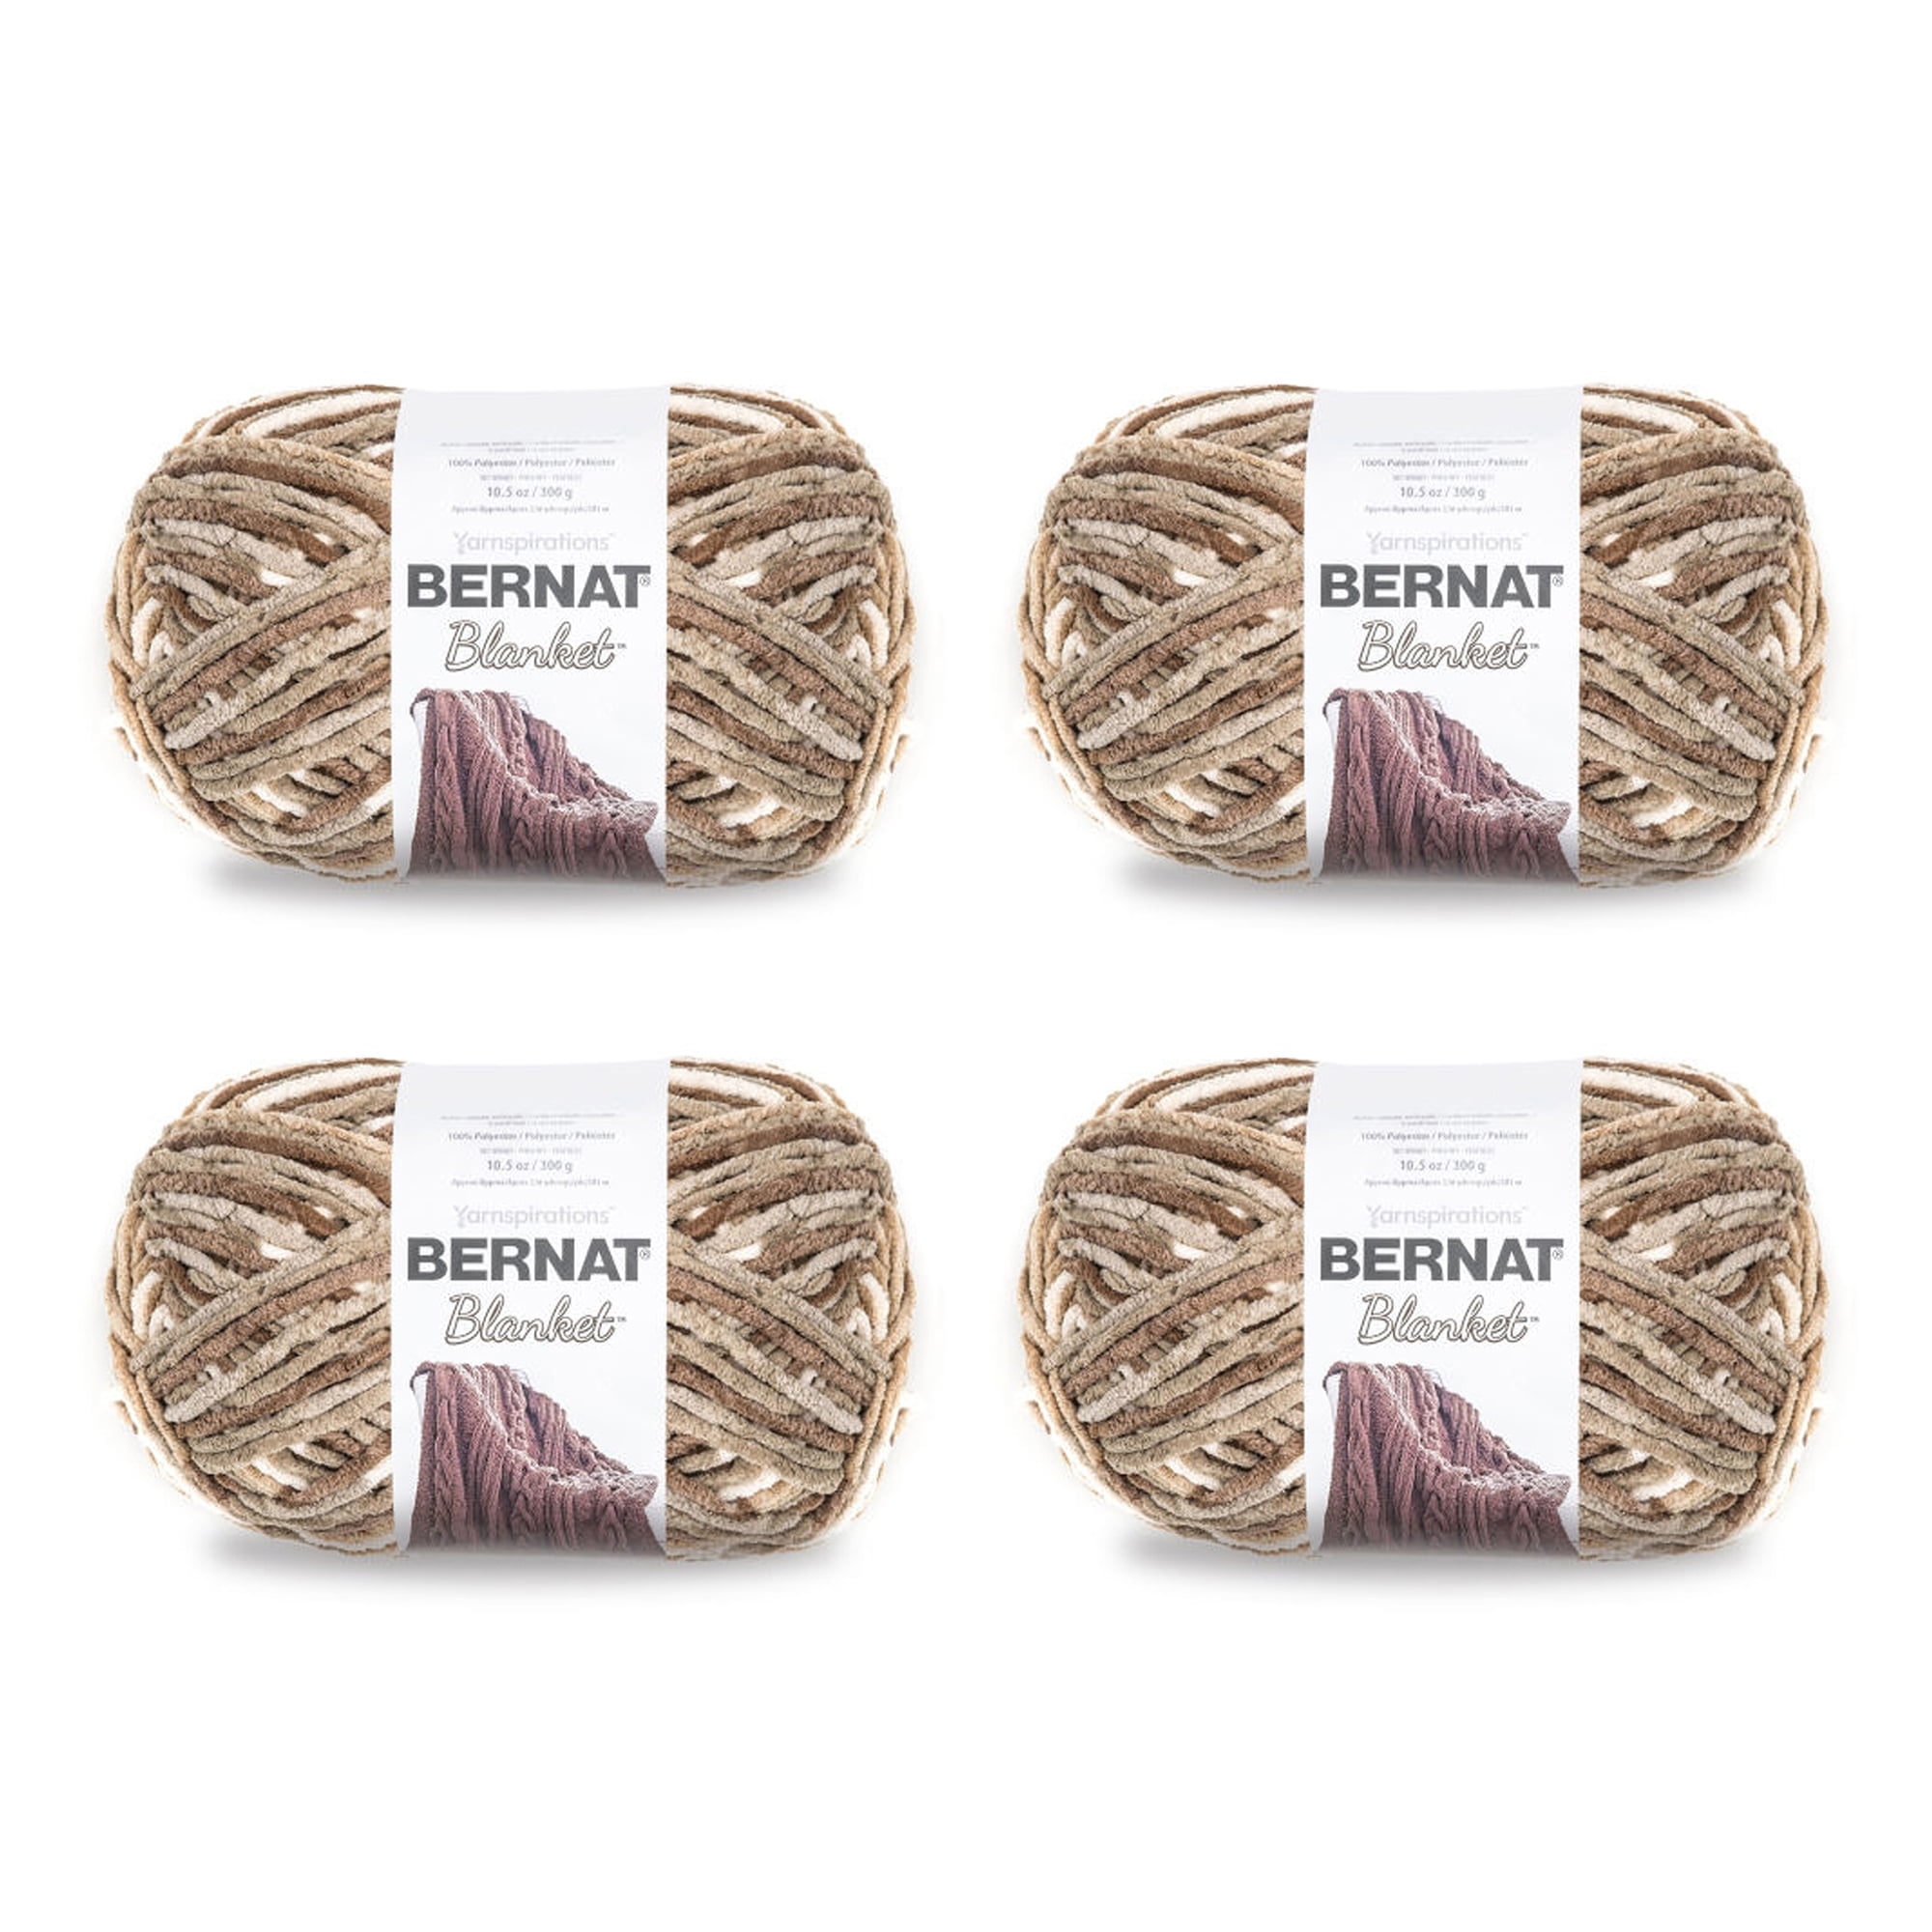 Bernat® Blanket Extra™ #7 Jumbo Polyester Yarn, Deep Sea 10.5oz